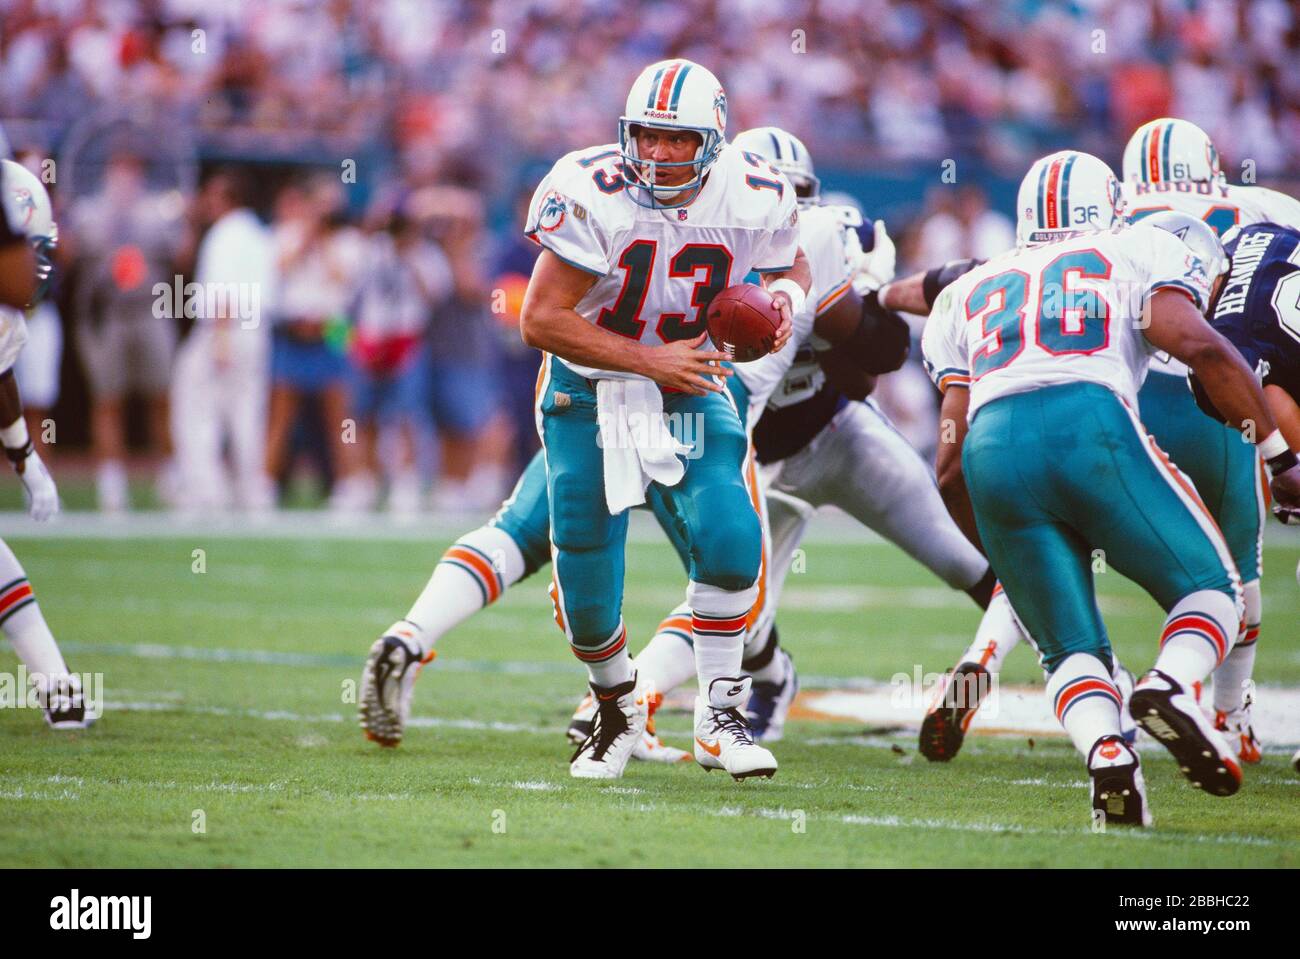 Dan Marino 0f the Miami Dolphins Stock Photo